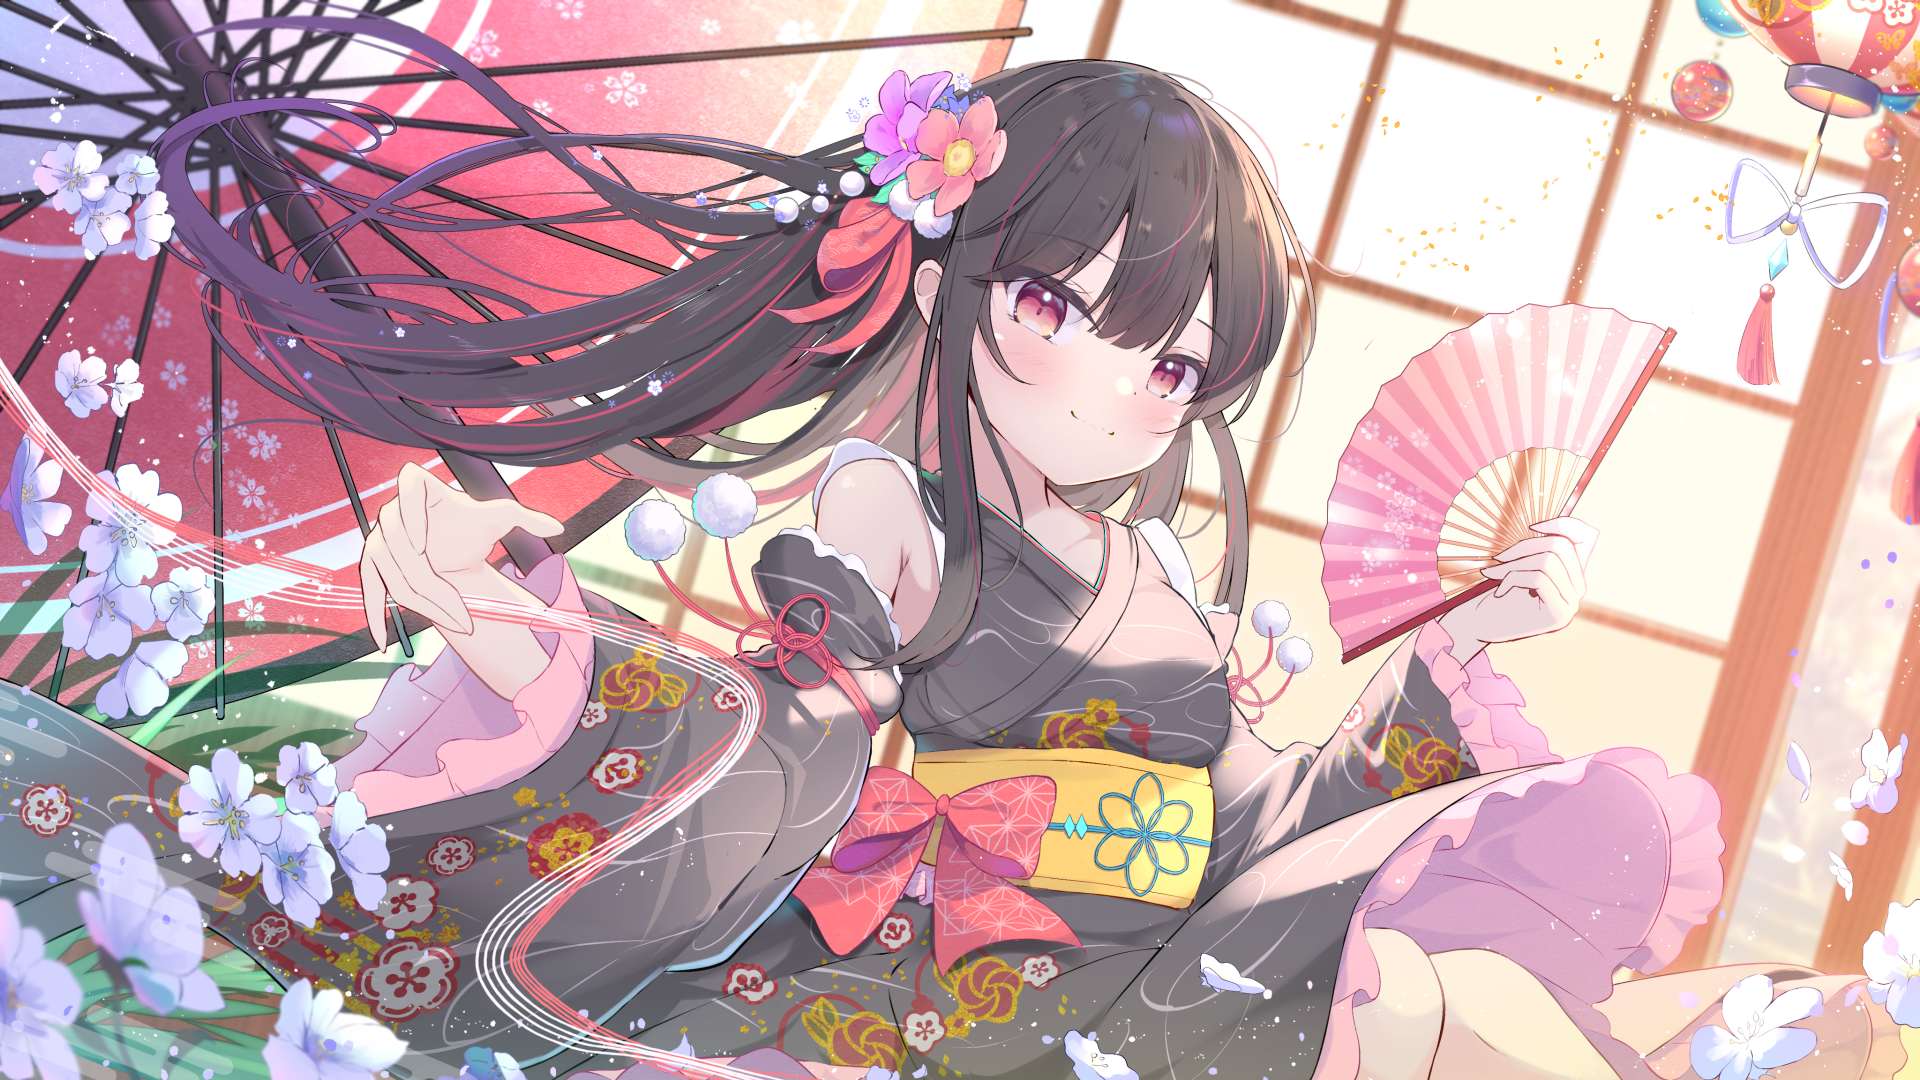 Kimono Fan Wennan Long Hair Music Game Anime Girls Fans Umbrella Flowers 1920x1080